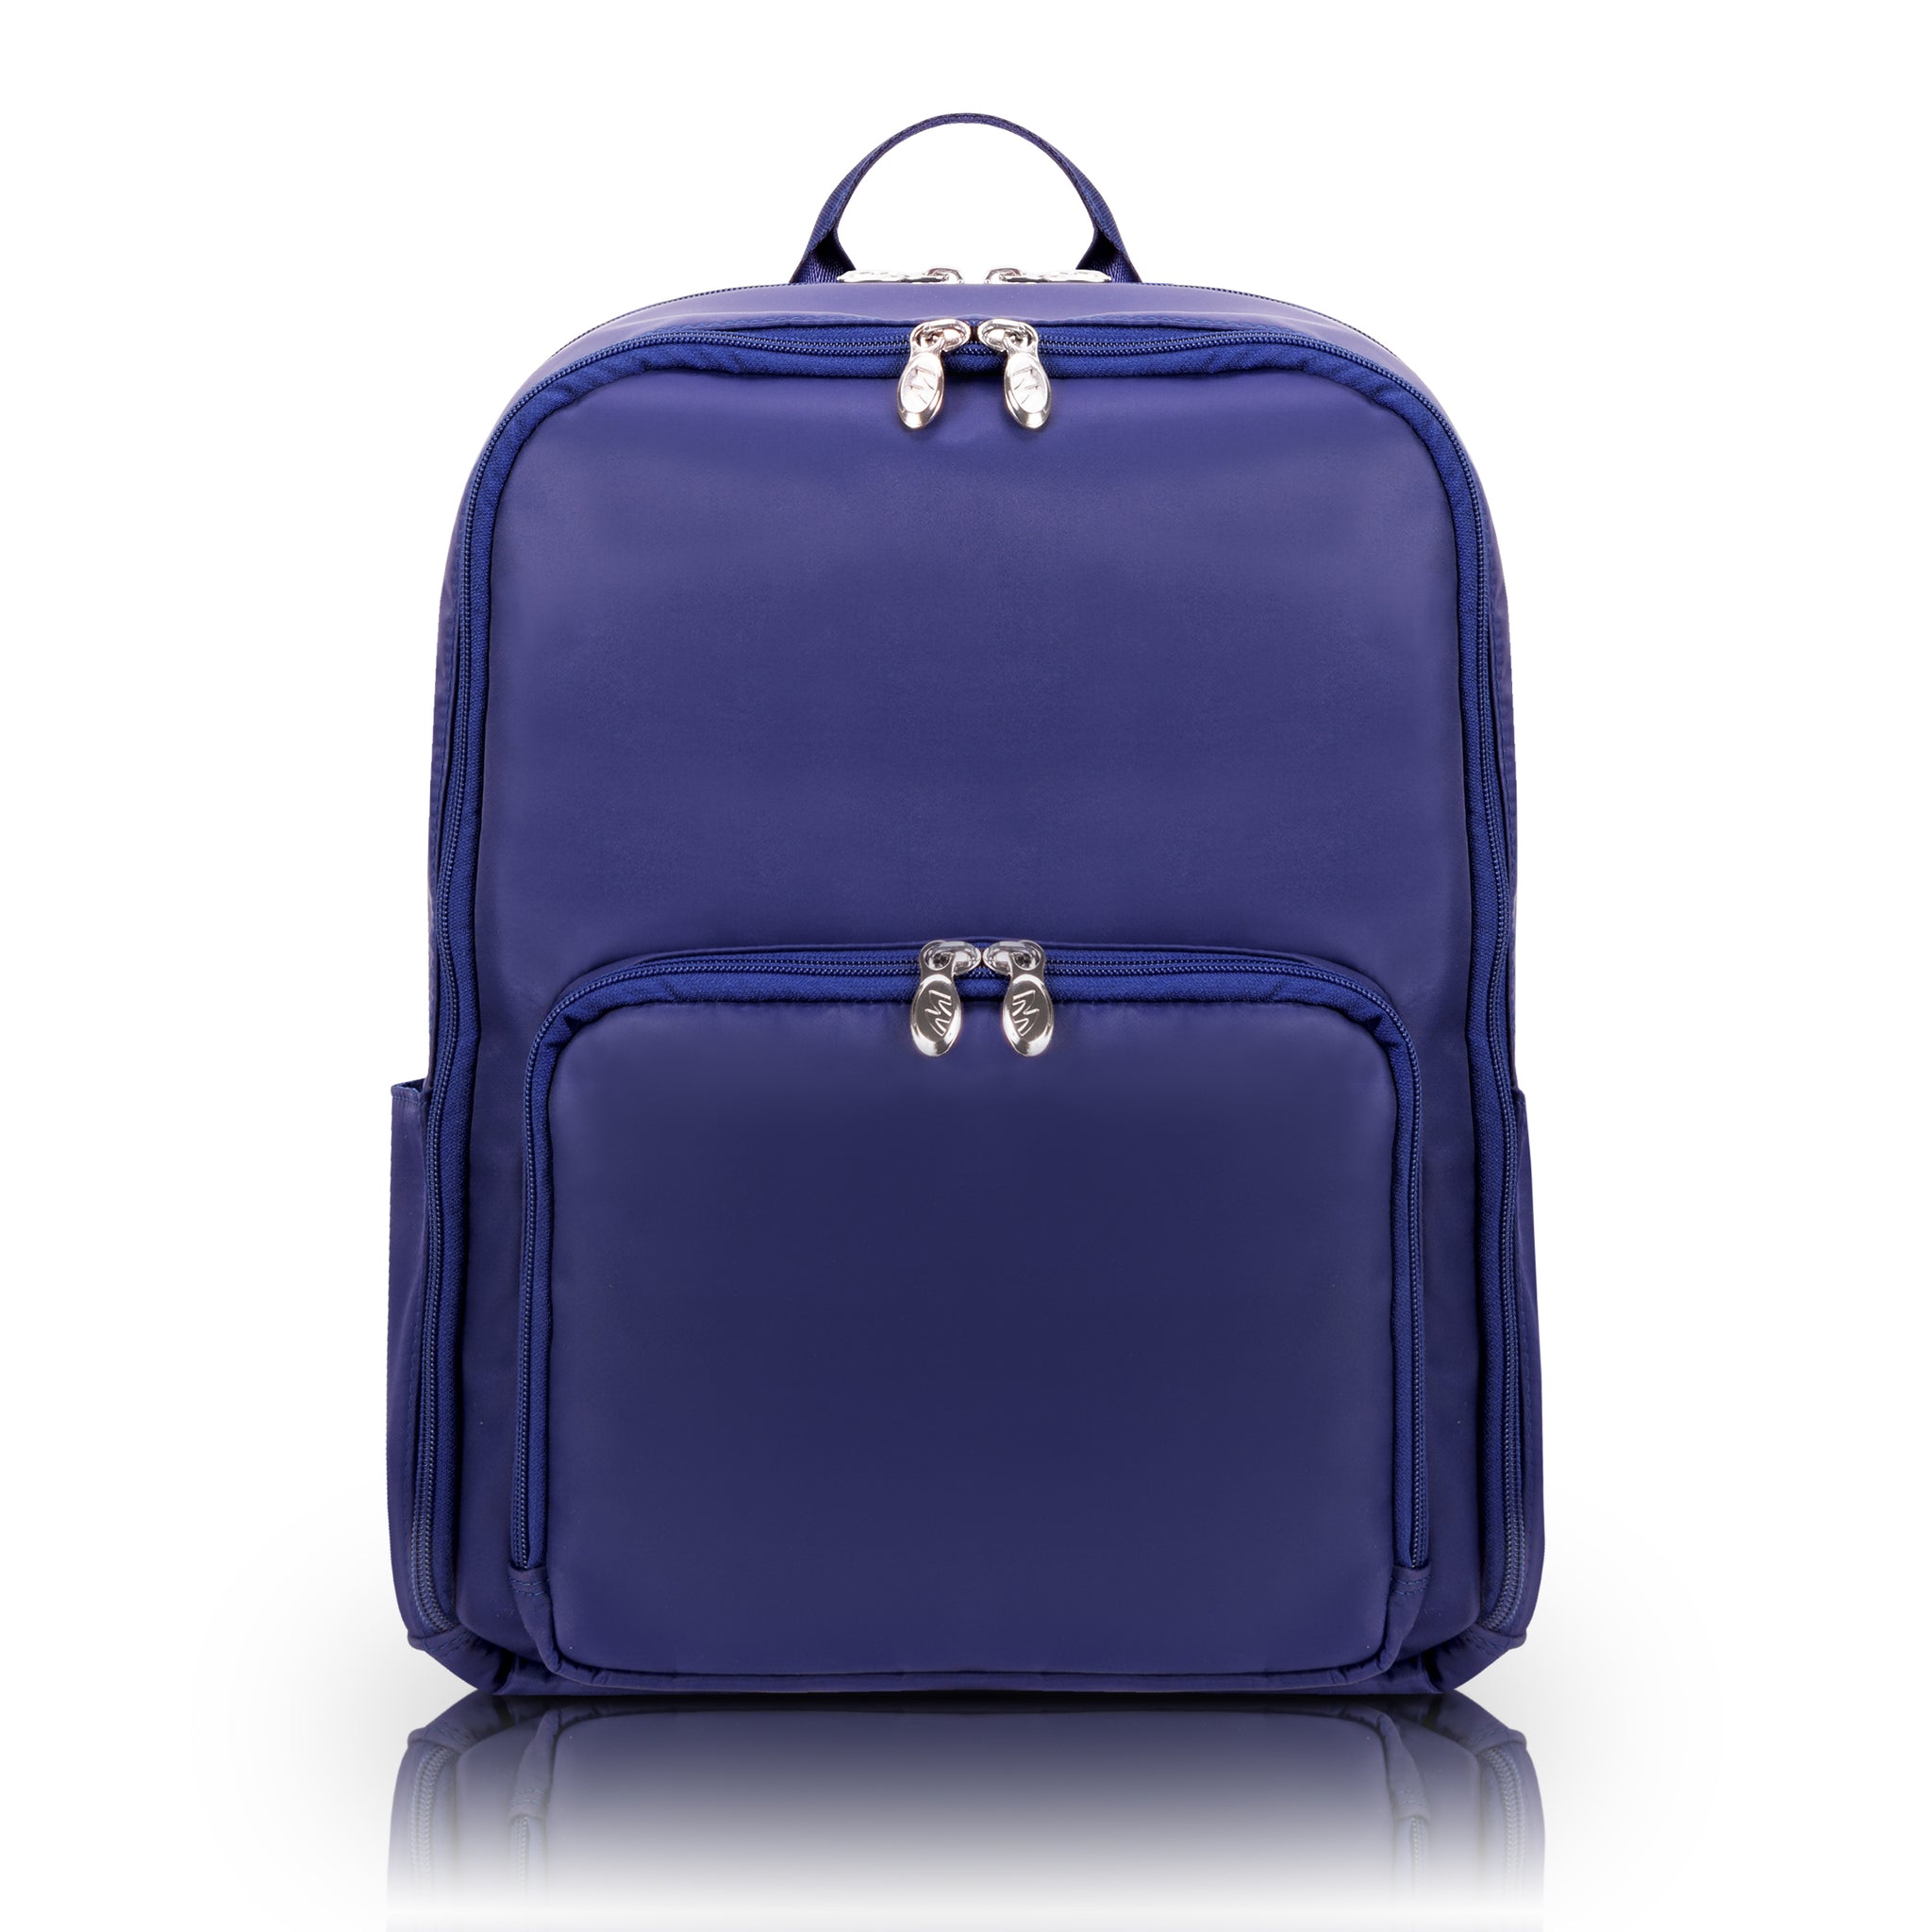 McKlein TRANSPORTER 15" Nylon Dual-Compartment, Laptop & Tablet Backpack